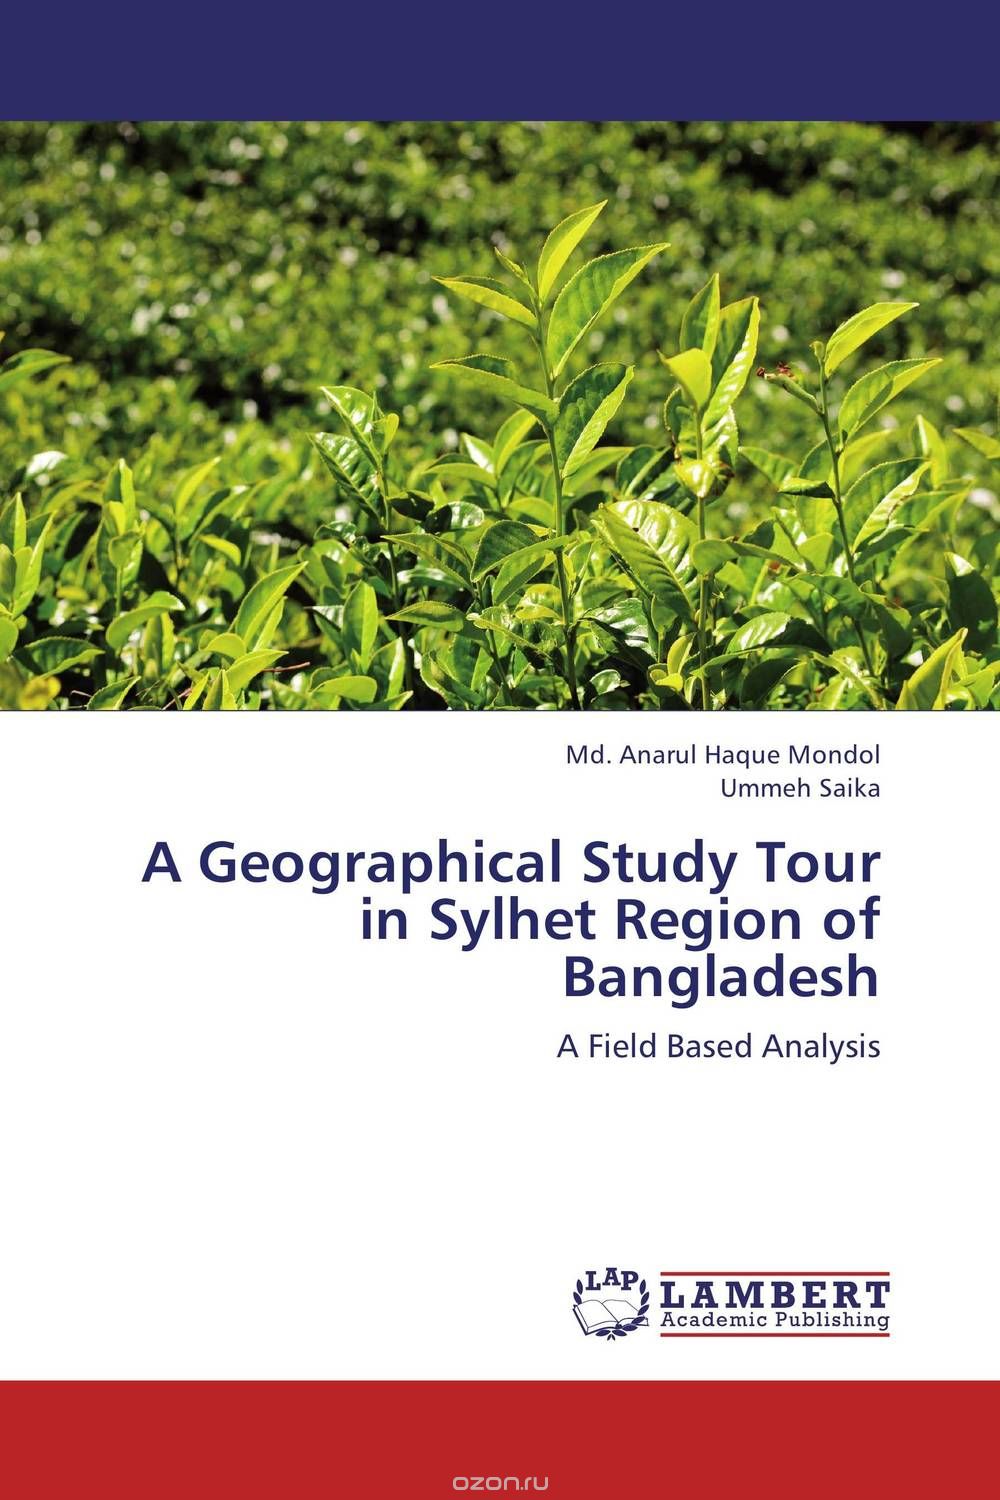 Скачать книгу "A Geographical Study Tour in Sylhet Region of Bangladesh"